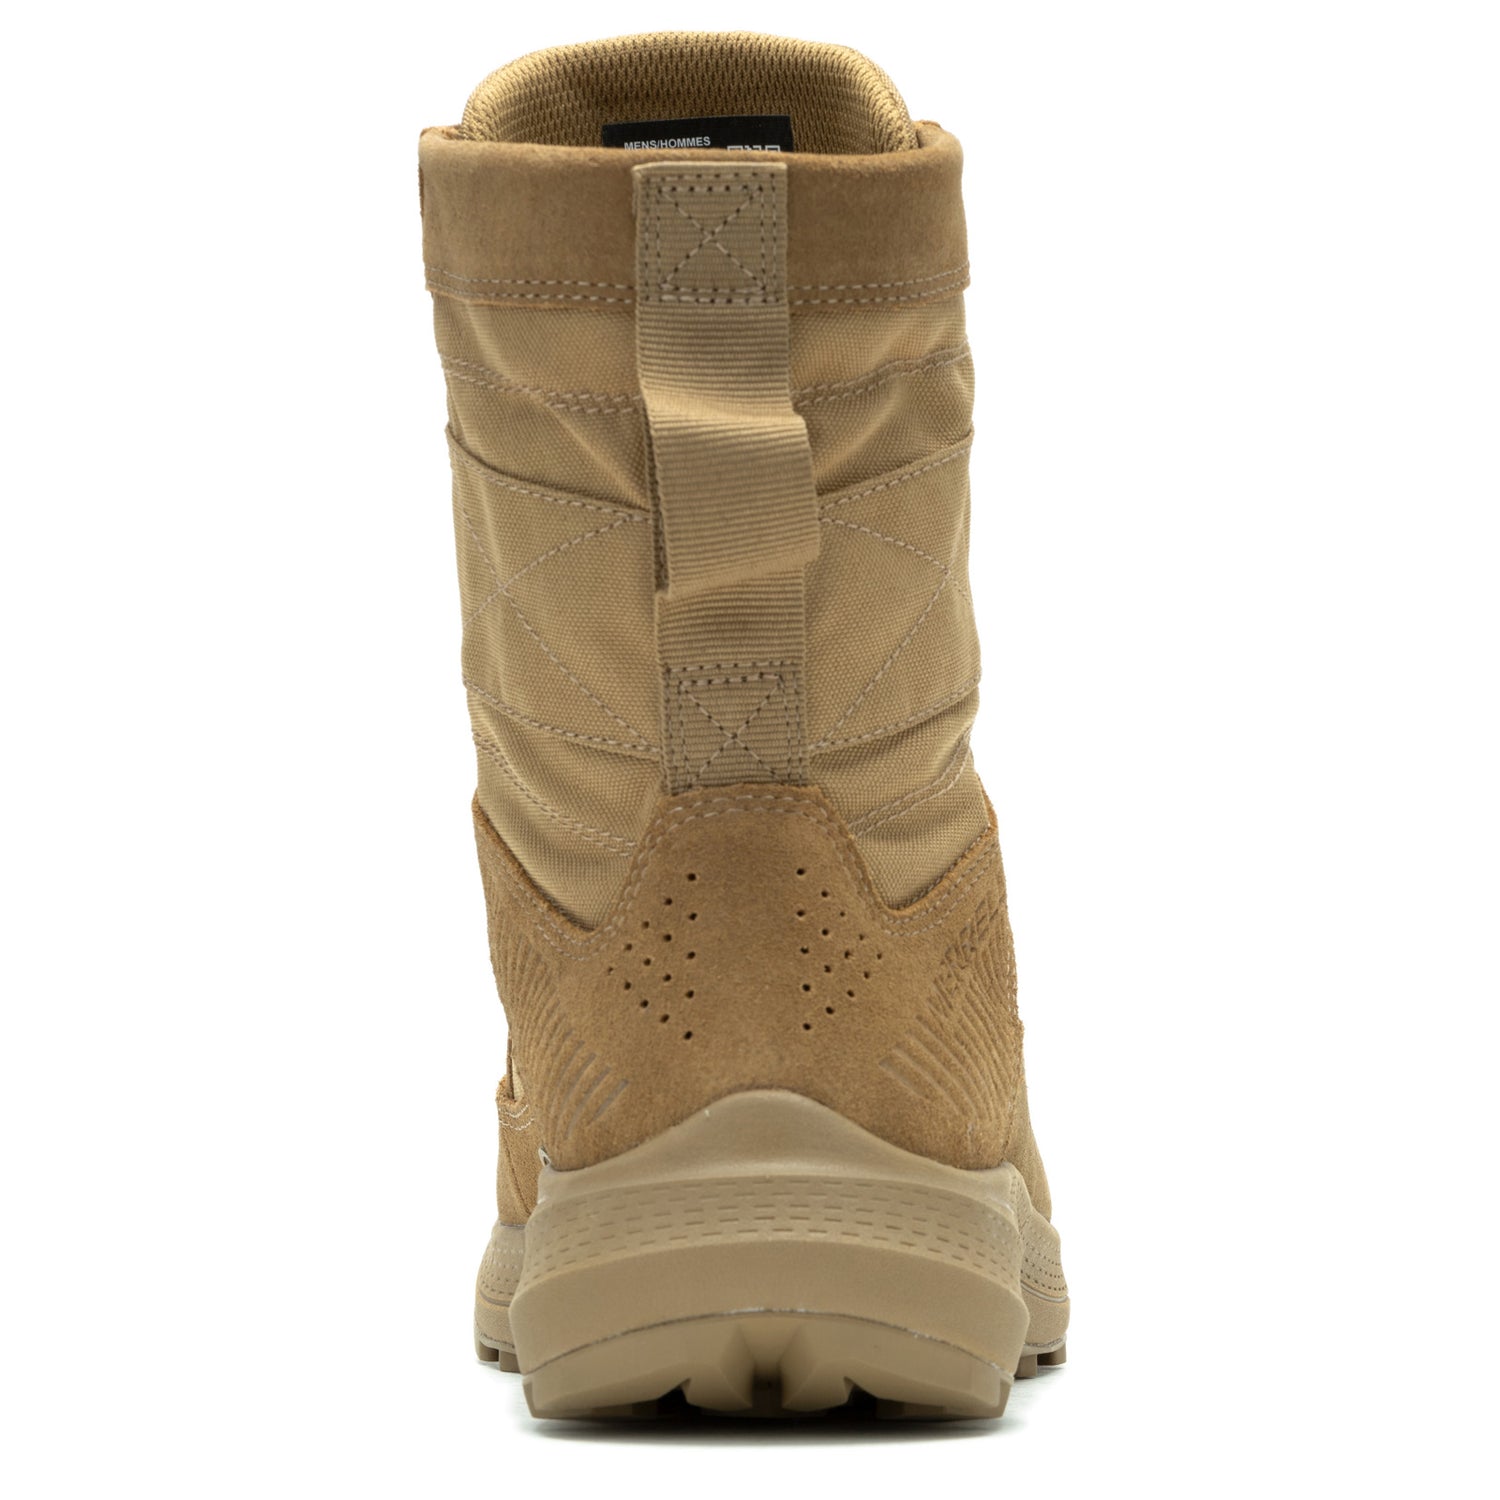 Peltz Shoes  Men's Merrell MQC Force Tactical Composite Toe Waterproof Boot Dark Coyote J005031